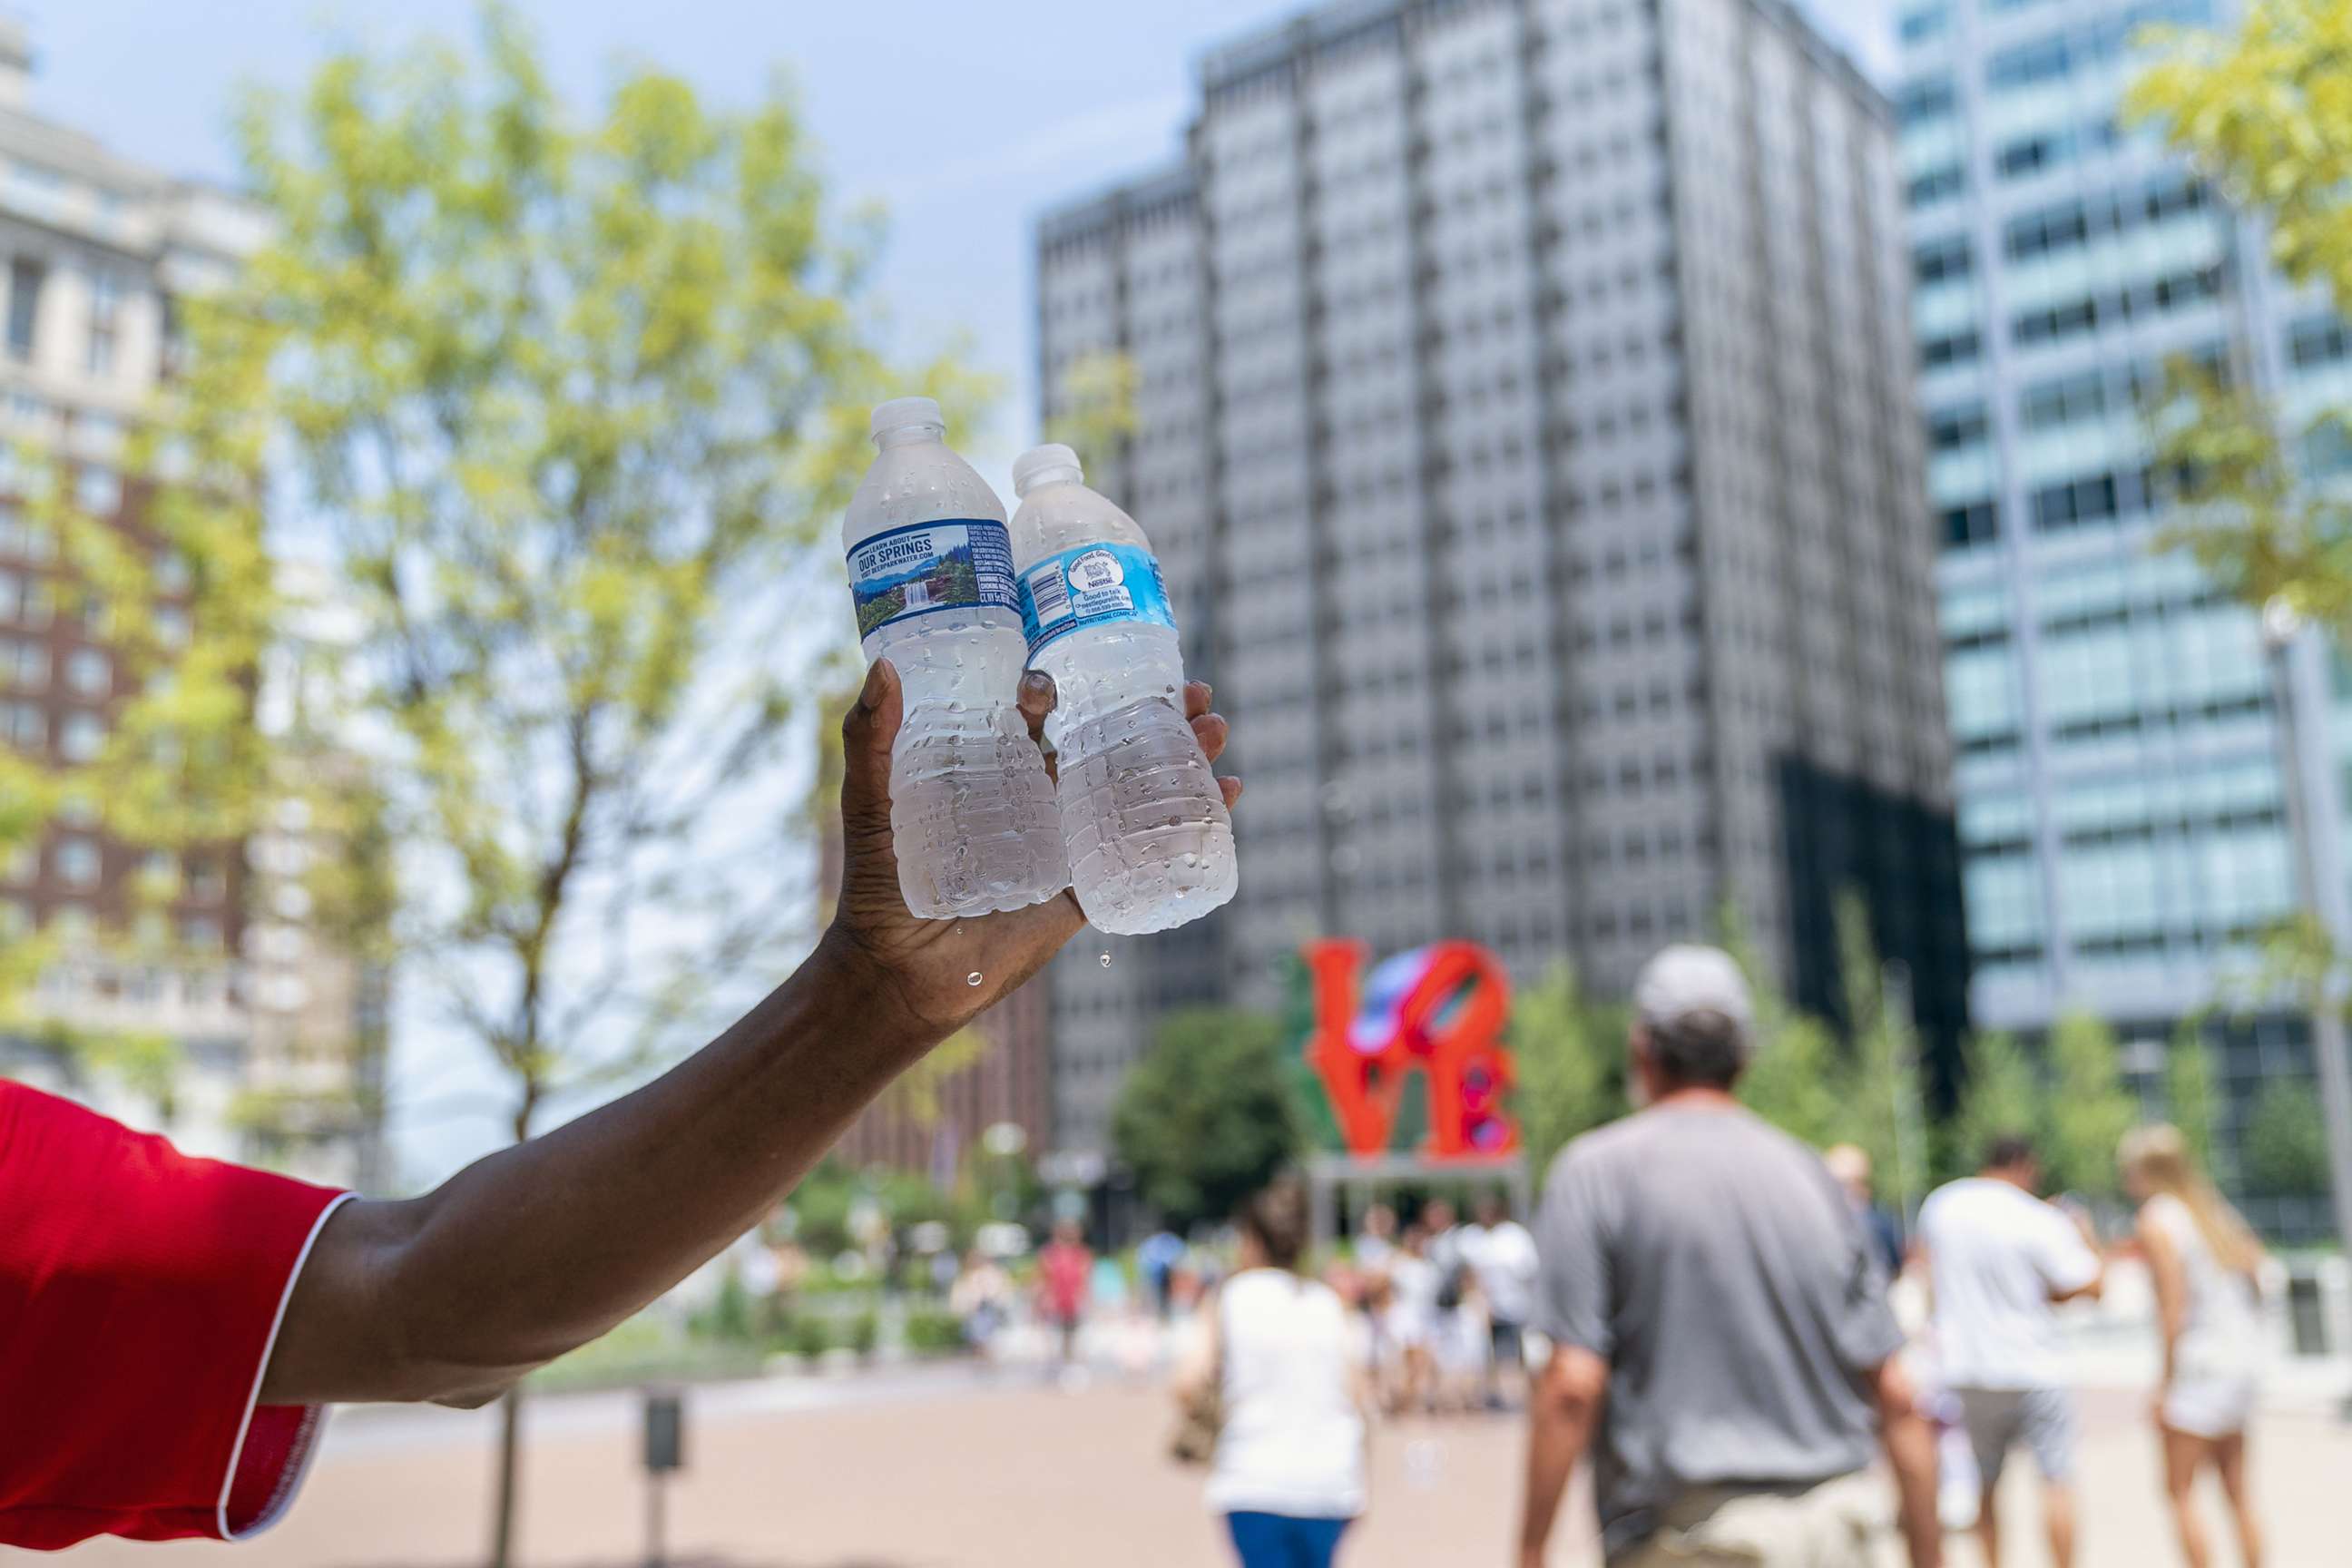 PHOTO: A man sells bottles of water in sweltering heat on July 1, 2018 in Philadelphia.